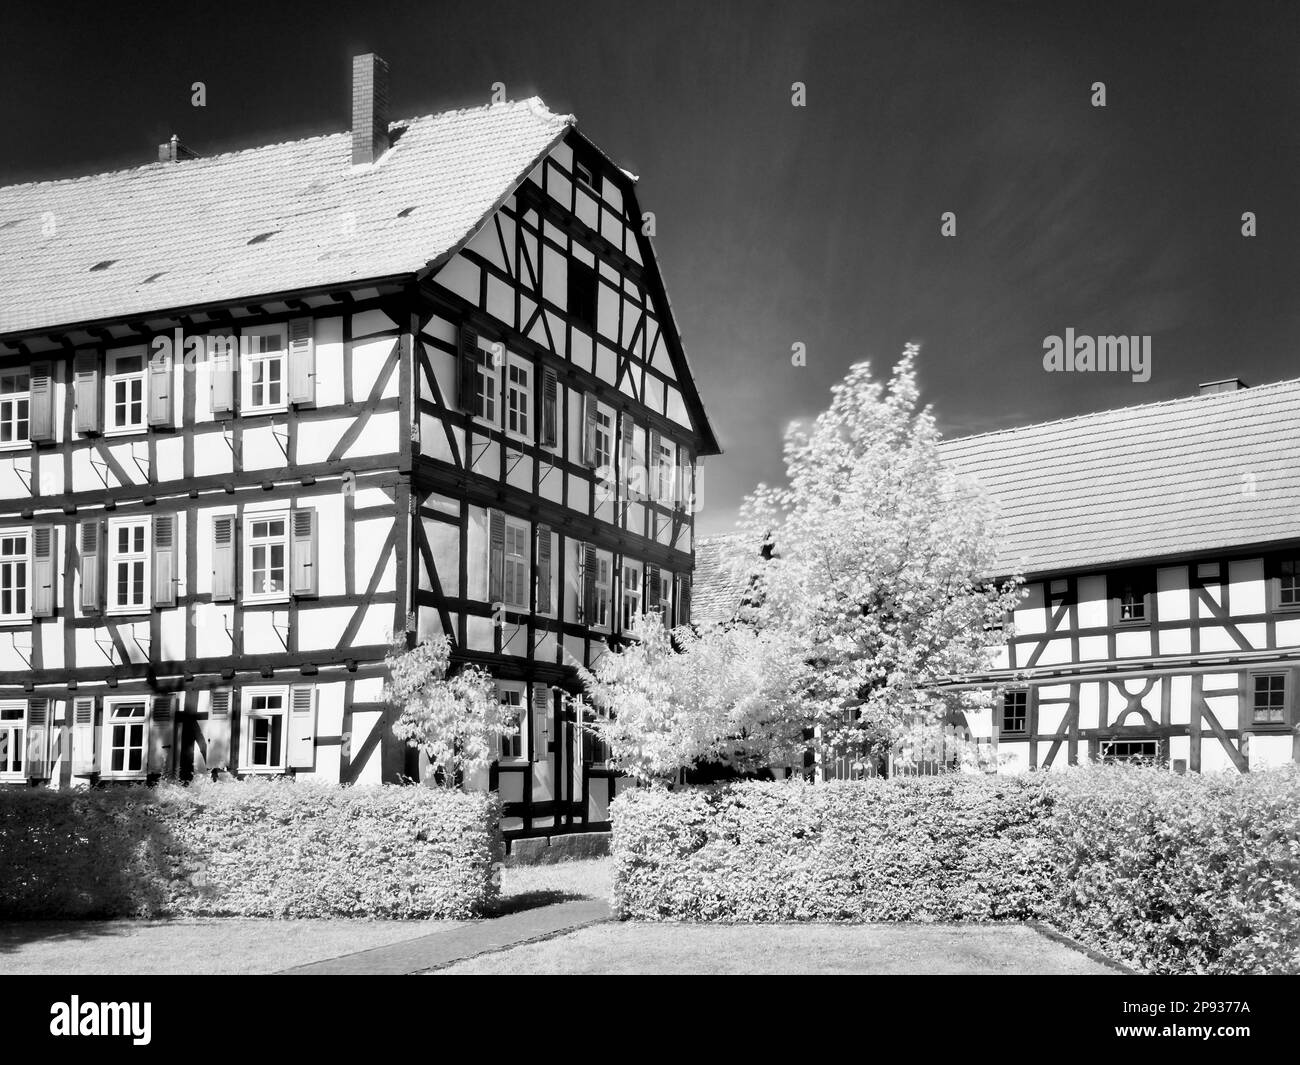 Europa, Germania, Assia, Assia centrale, Marburger Land, Neustadt/Hesse, centro storico con ERN-Tennen-Haus a Schmiedegasse Foto Stock